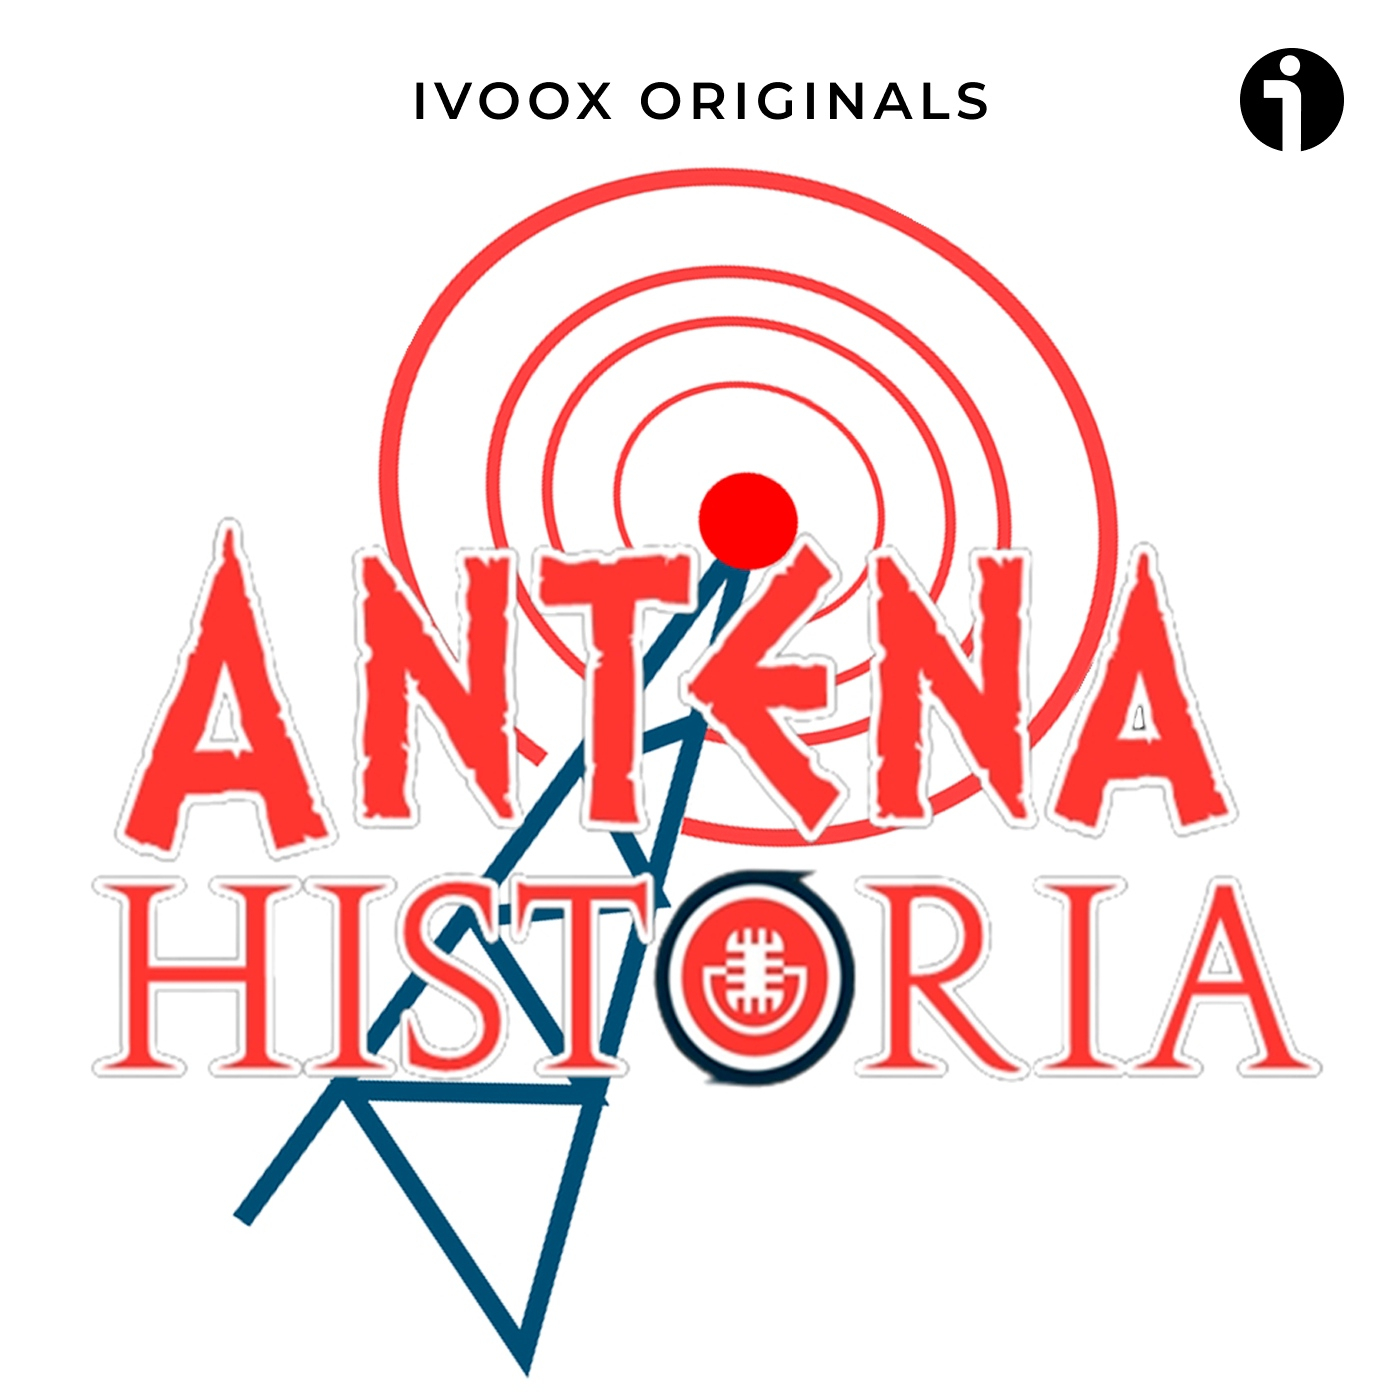 Antena Historia